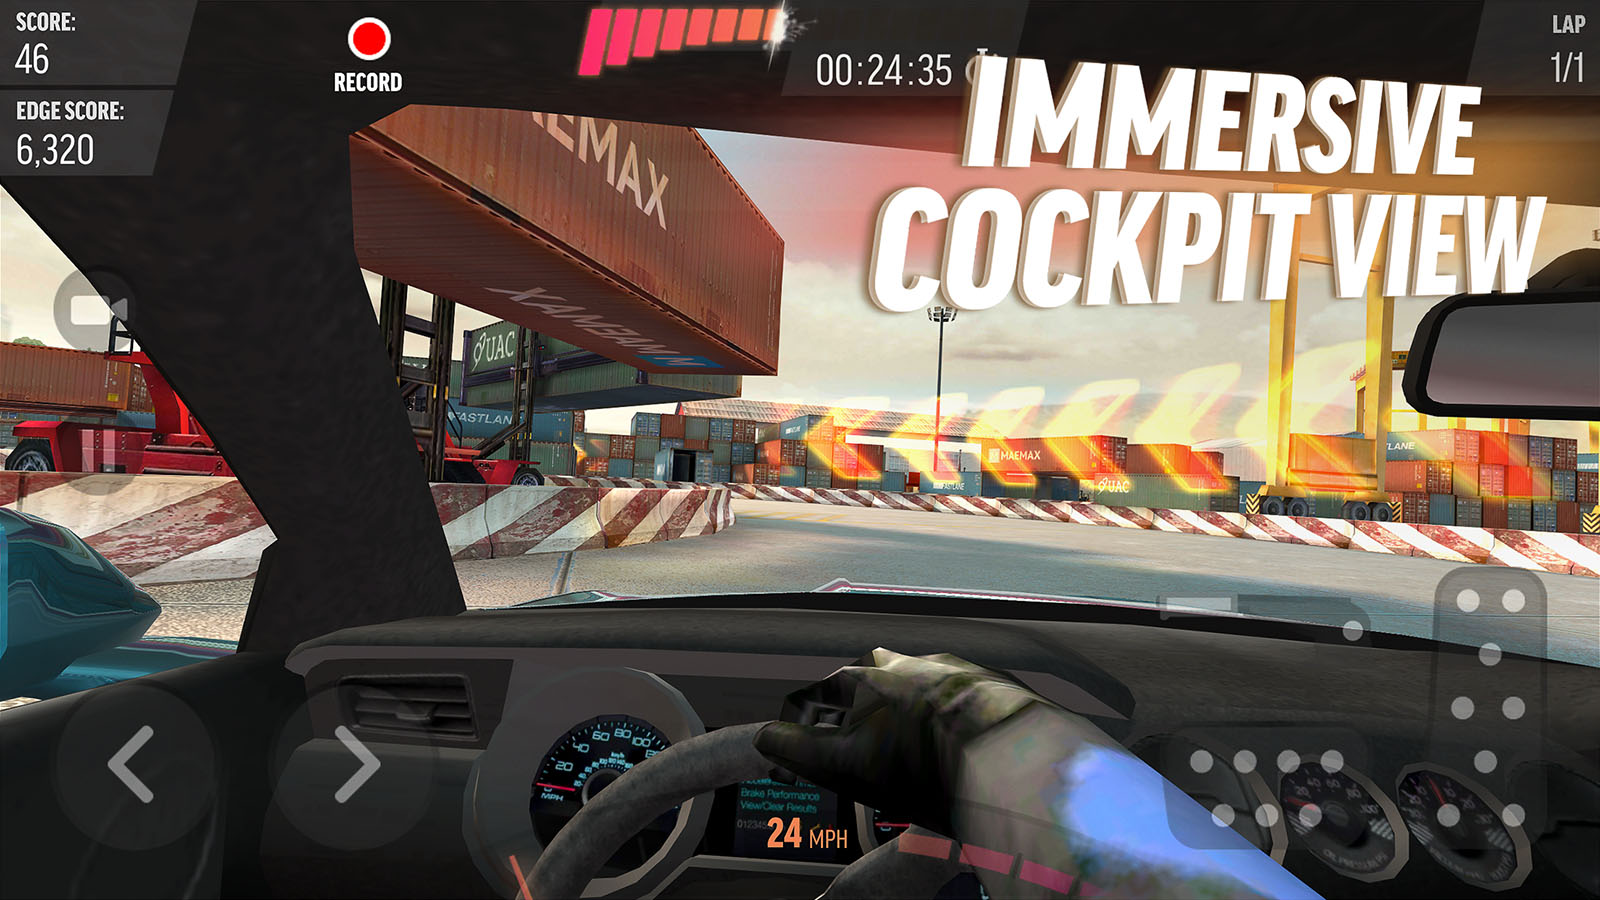 Drift Max Pro Drift Racing na App Store